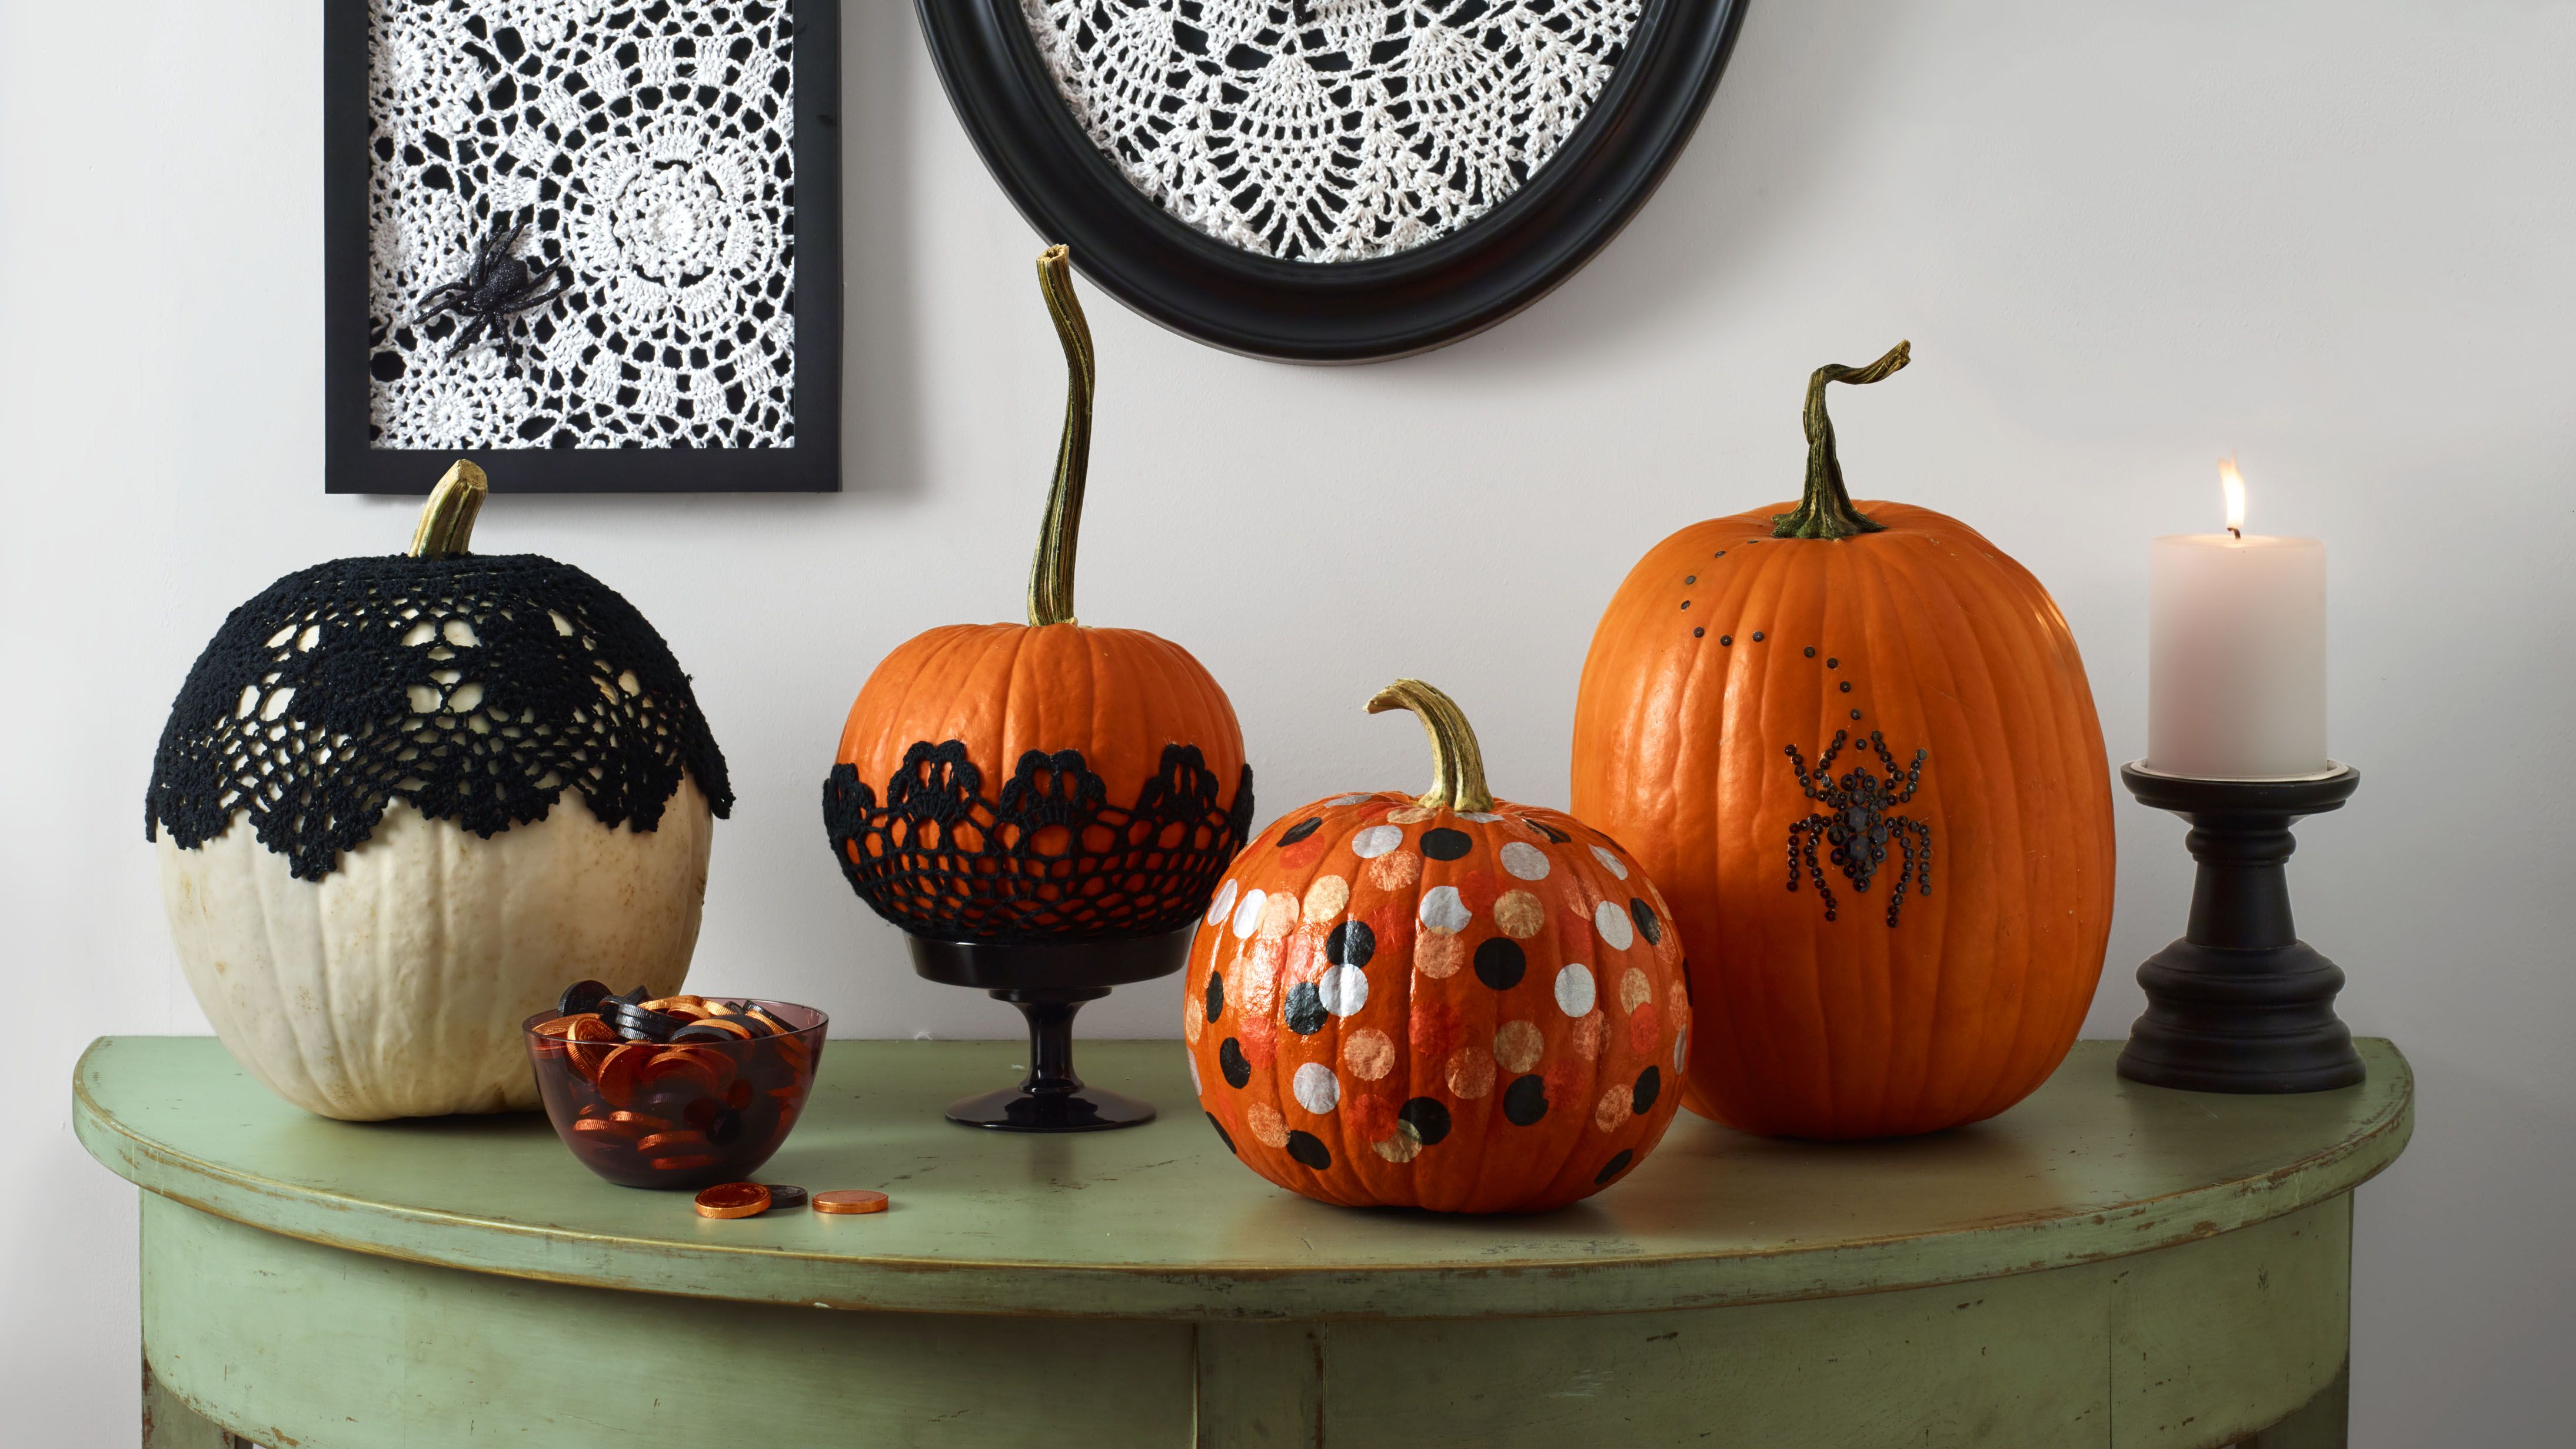 10 Fun No-Carve Pumpkin Decorating Ideas for Halloween 10